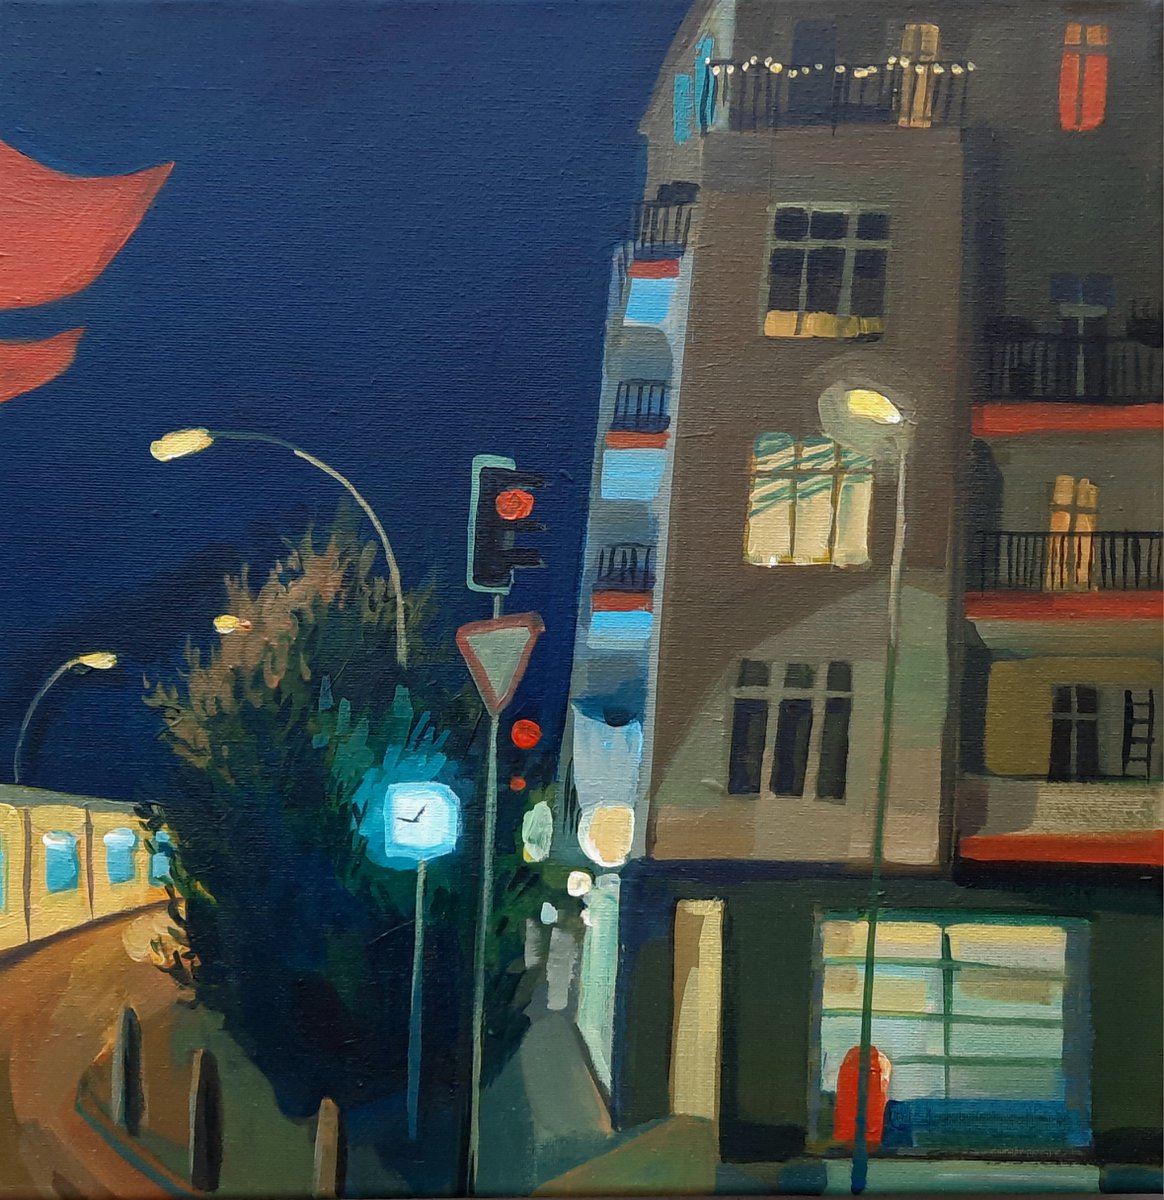 Late at night, 2020 by Lidia Beleninova